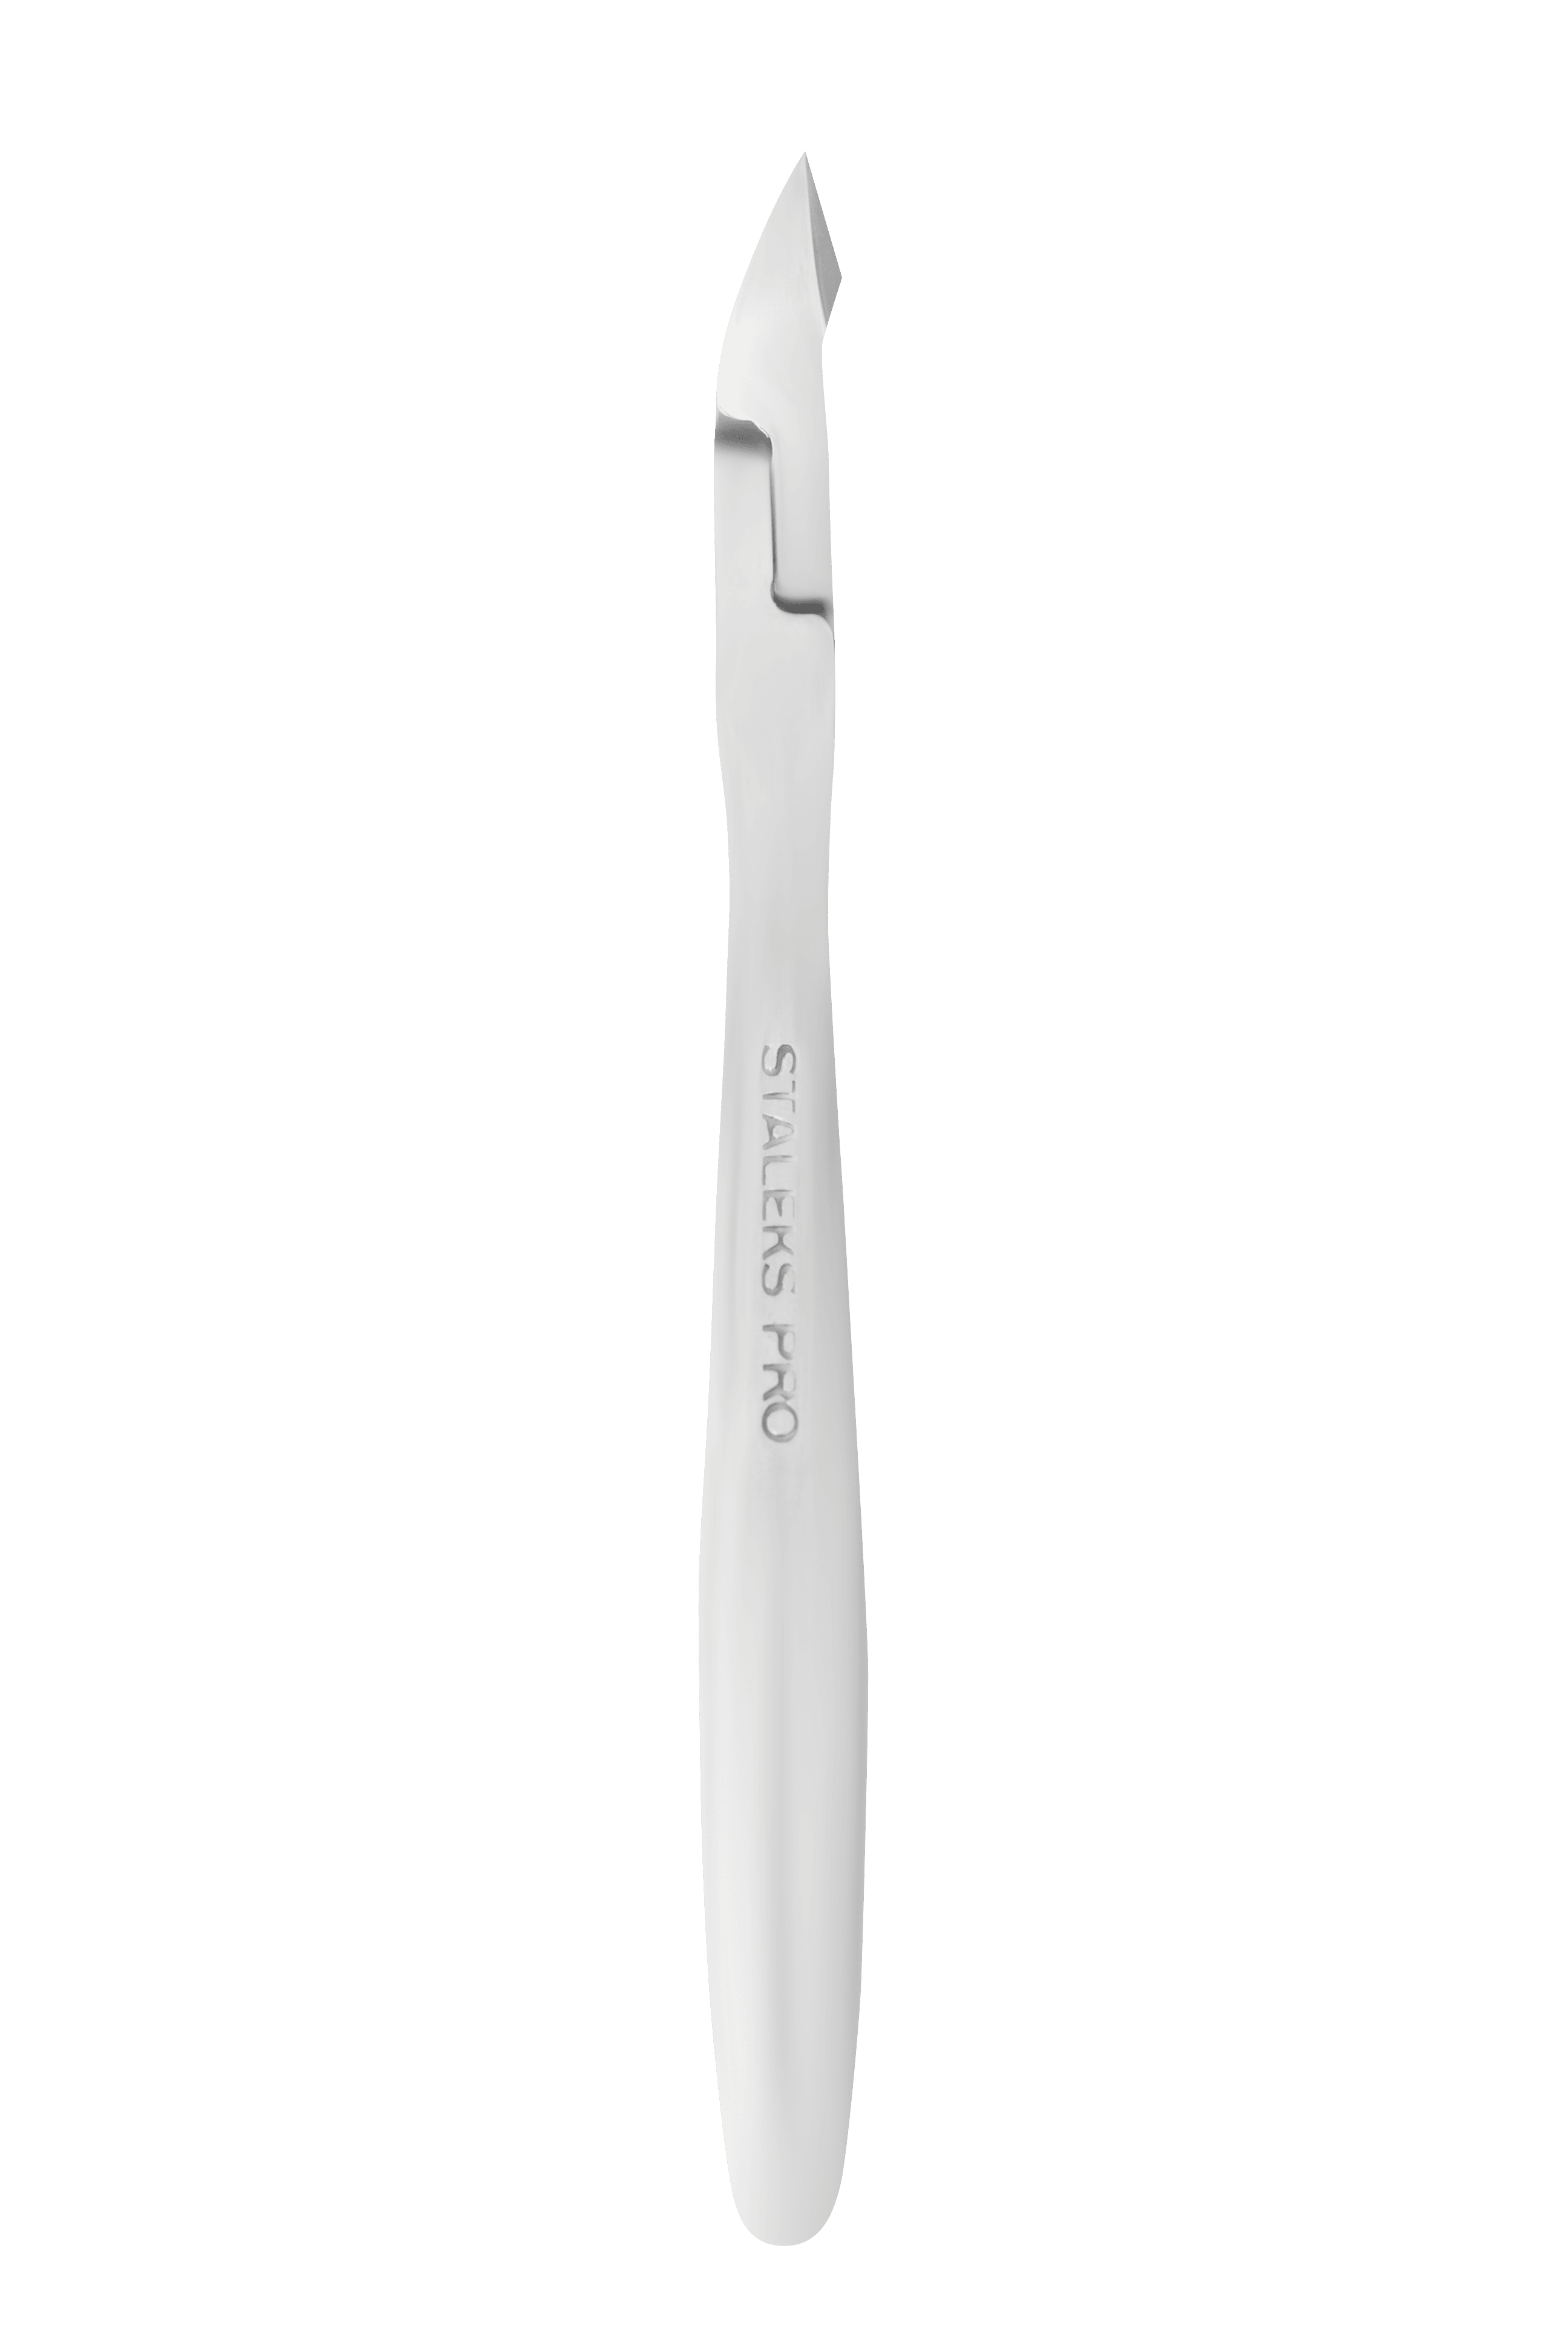 STALEKS EXPERT NE 90/7 - Tronchesina professionale per cuticole unghie 7mm - Divina Nails